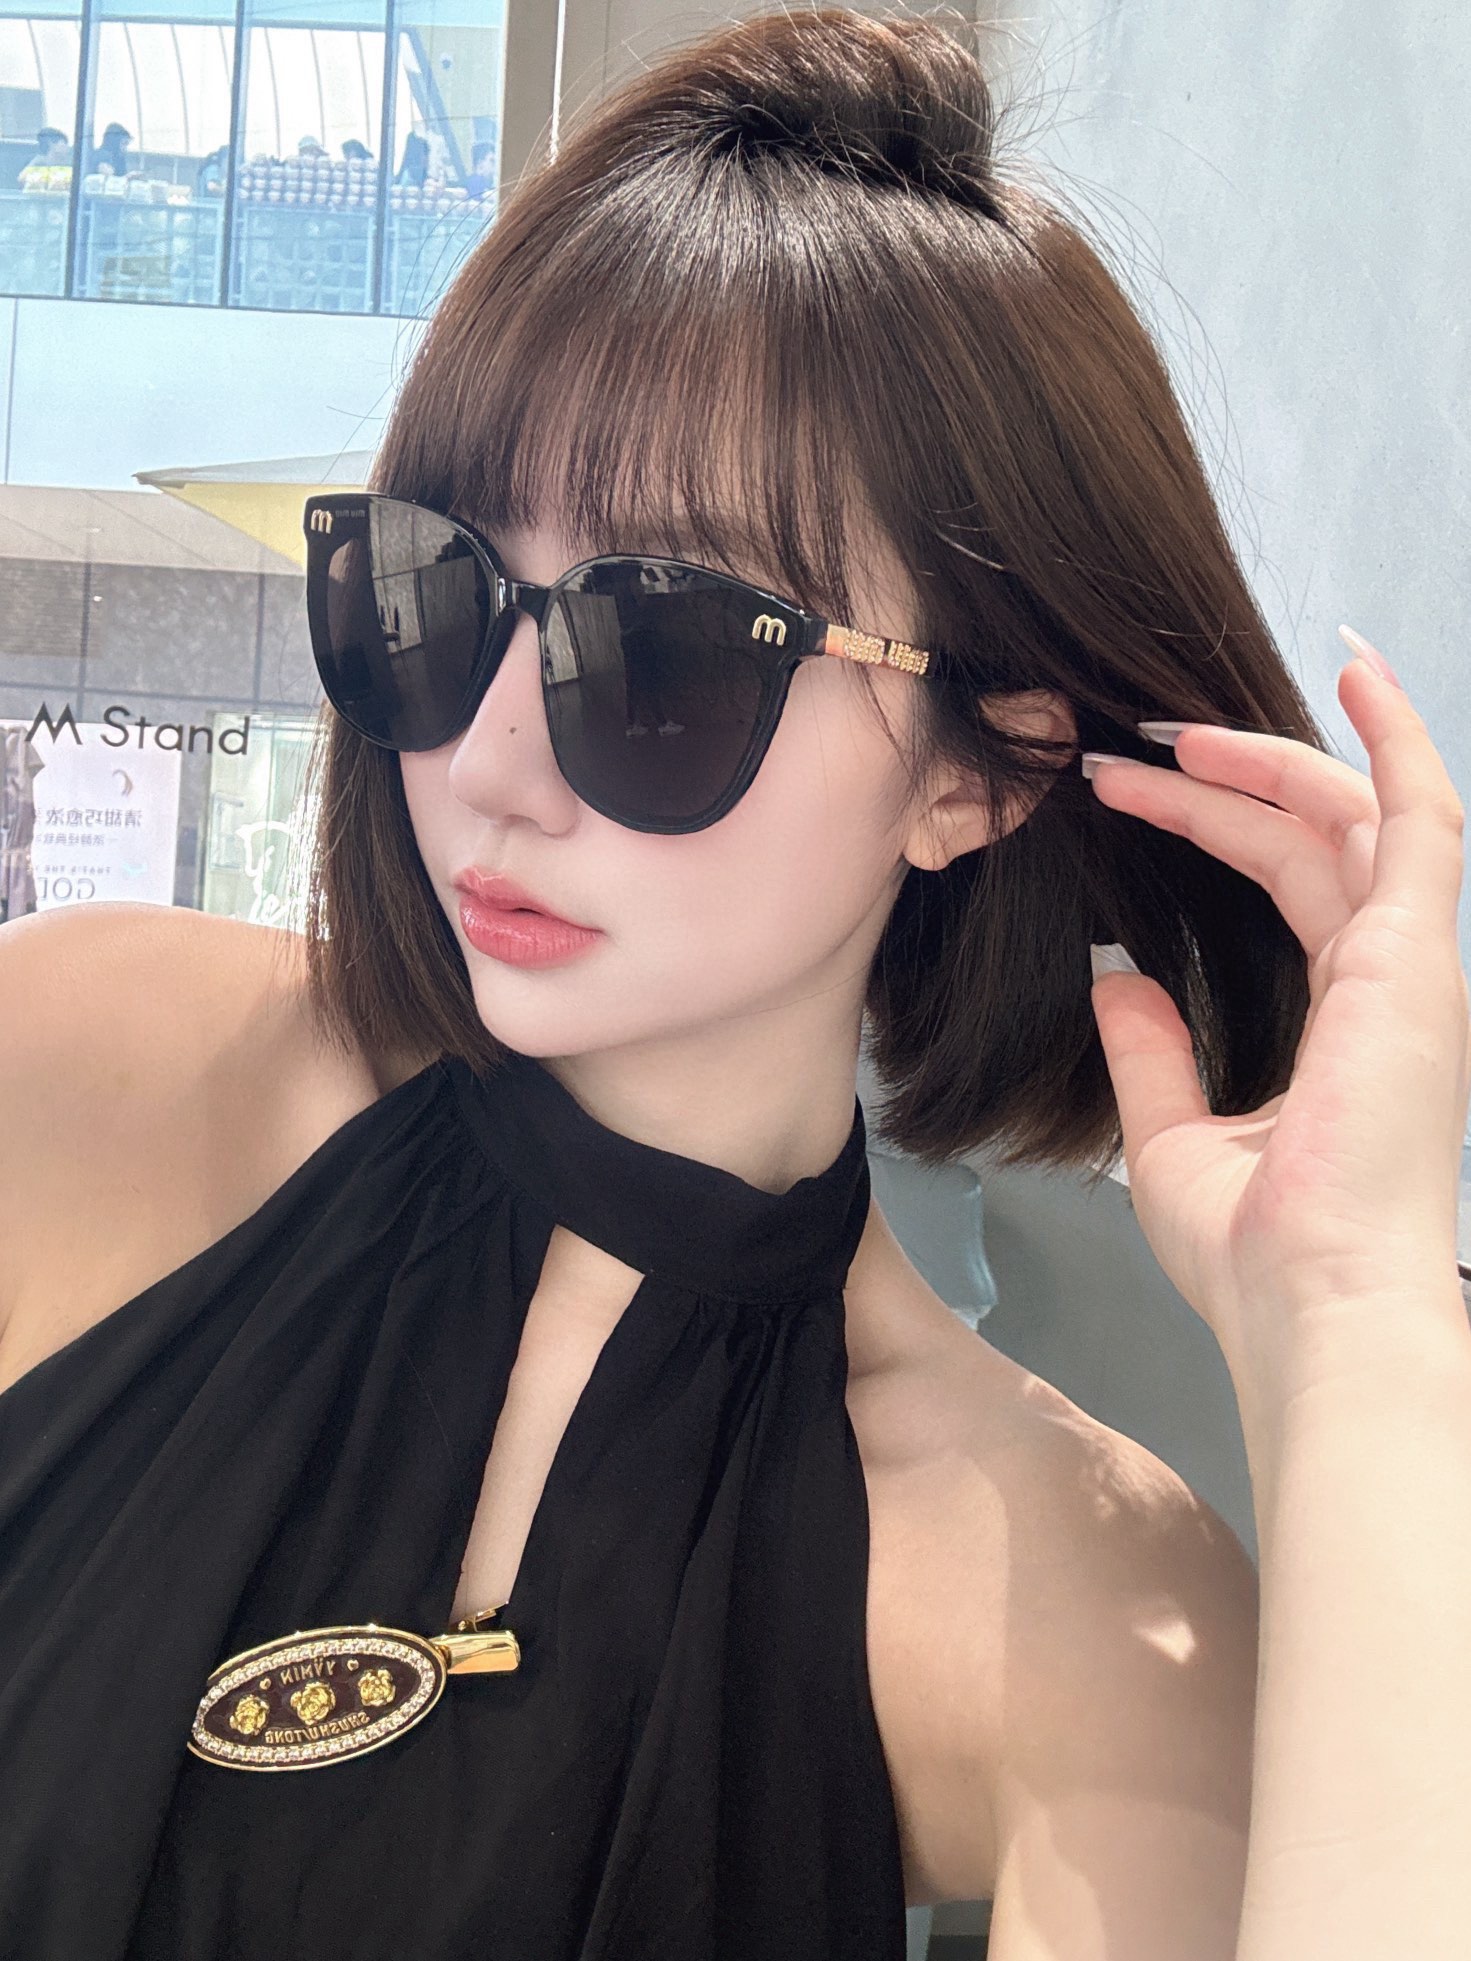 MiuMiu Sunglasses Highest Product Quality